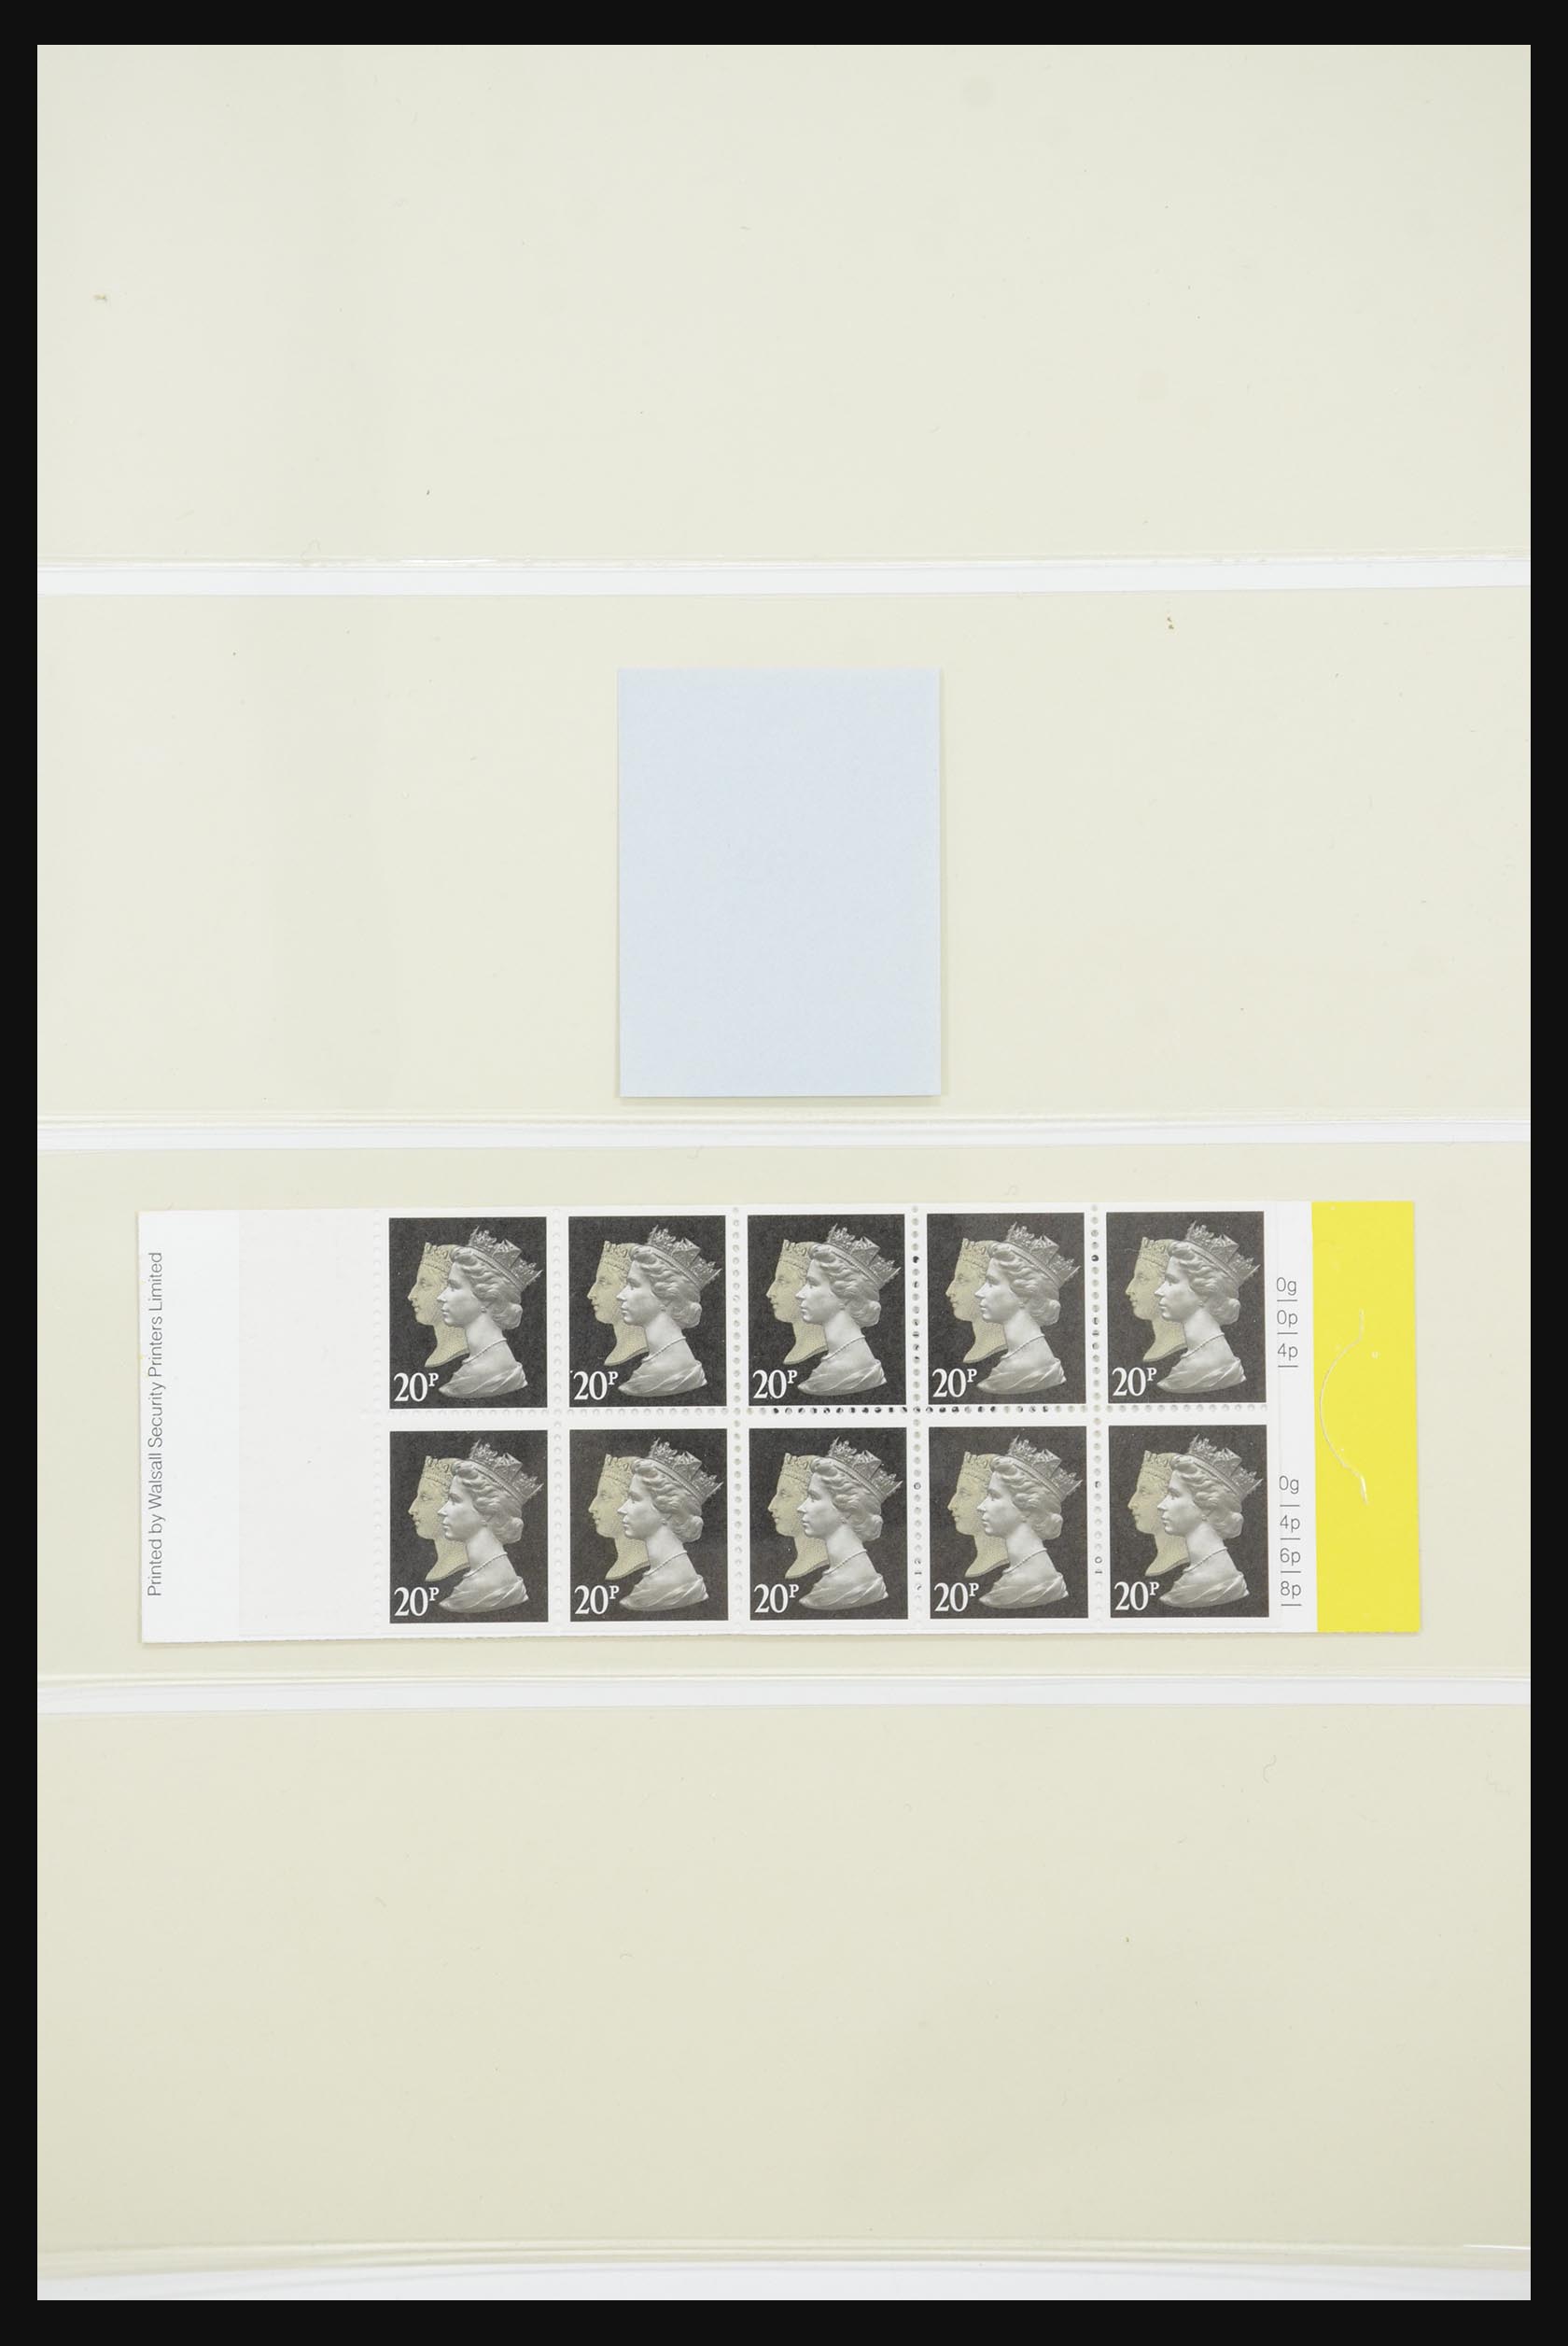 31960 190 - 31960 Great Britain stampbooklets 1989-2000.